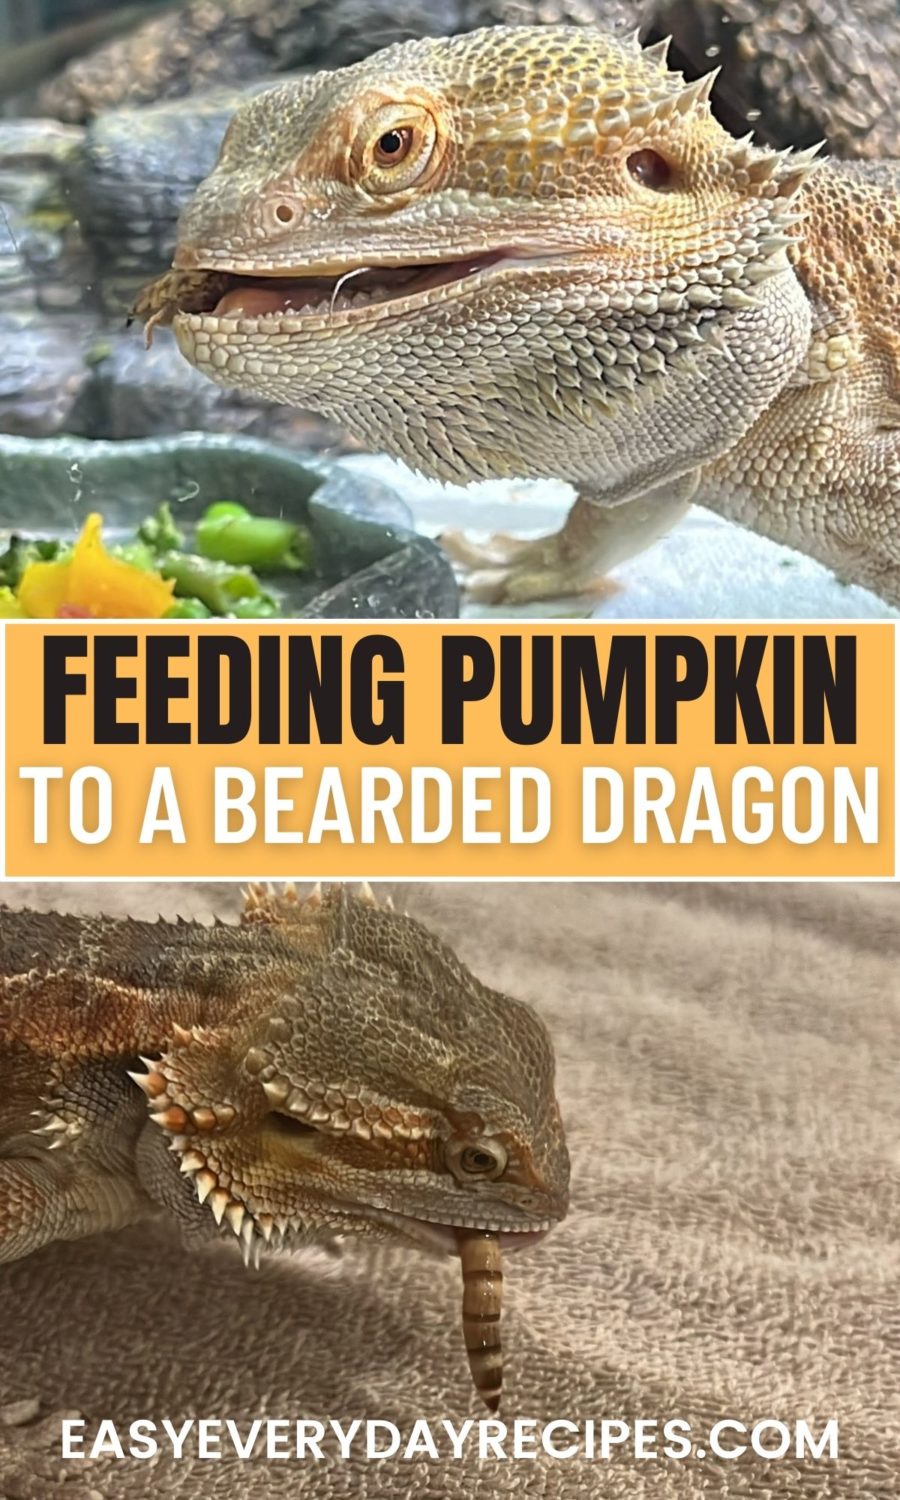 Feeding pumpkin to a bearded dragon.